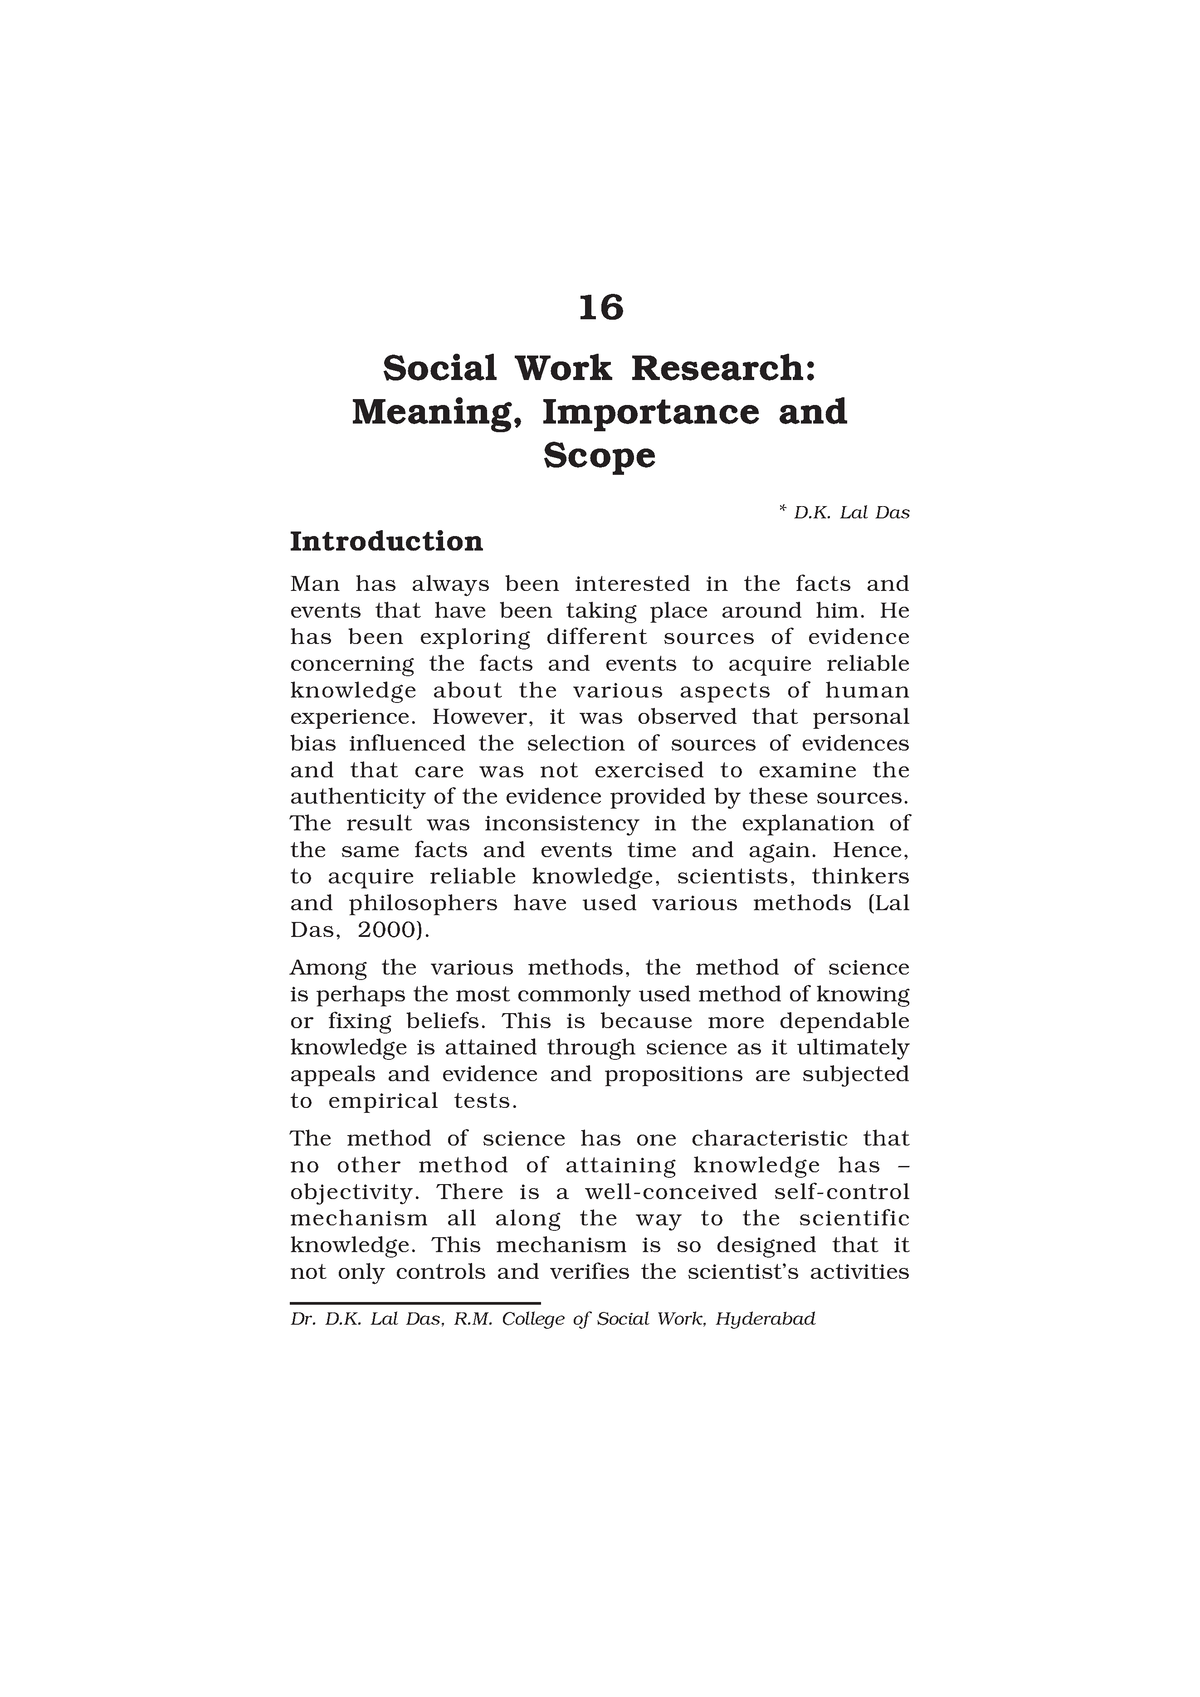 scope of social work research in pakistan